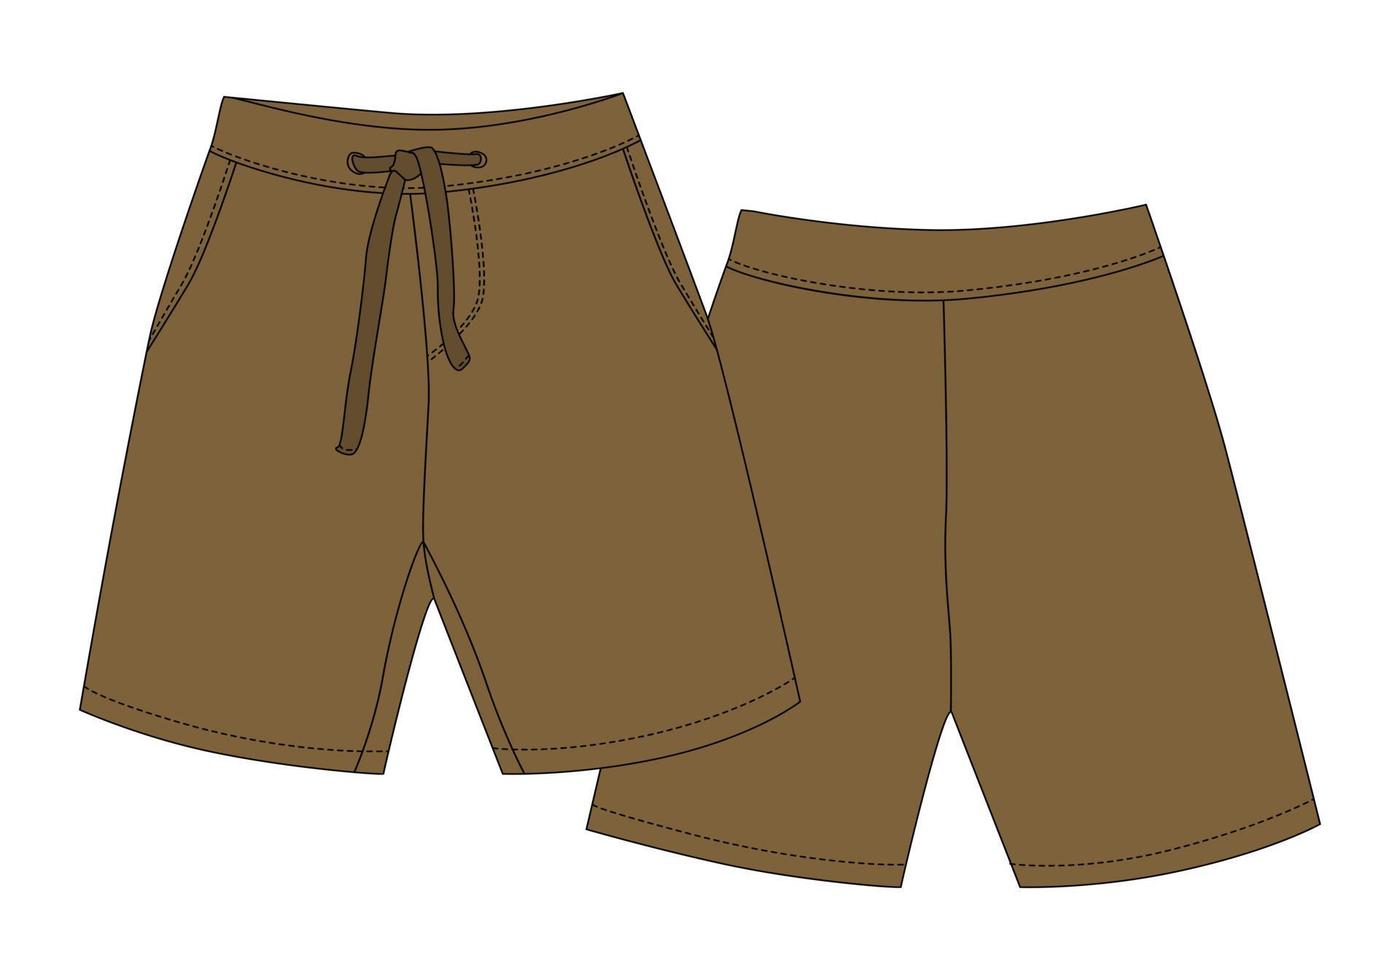 Technical sketch sport shorts pants design. vector